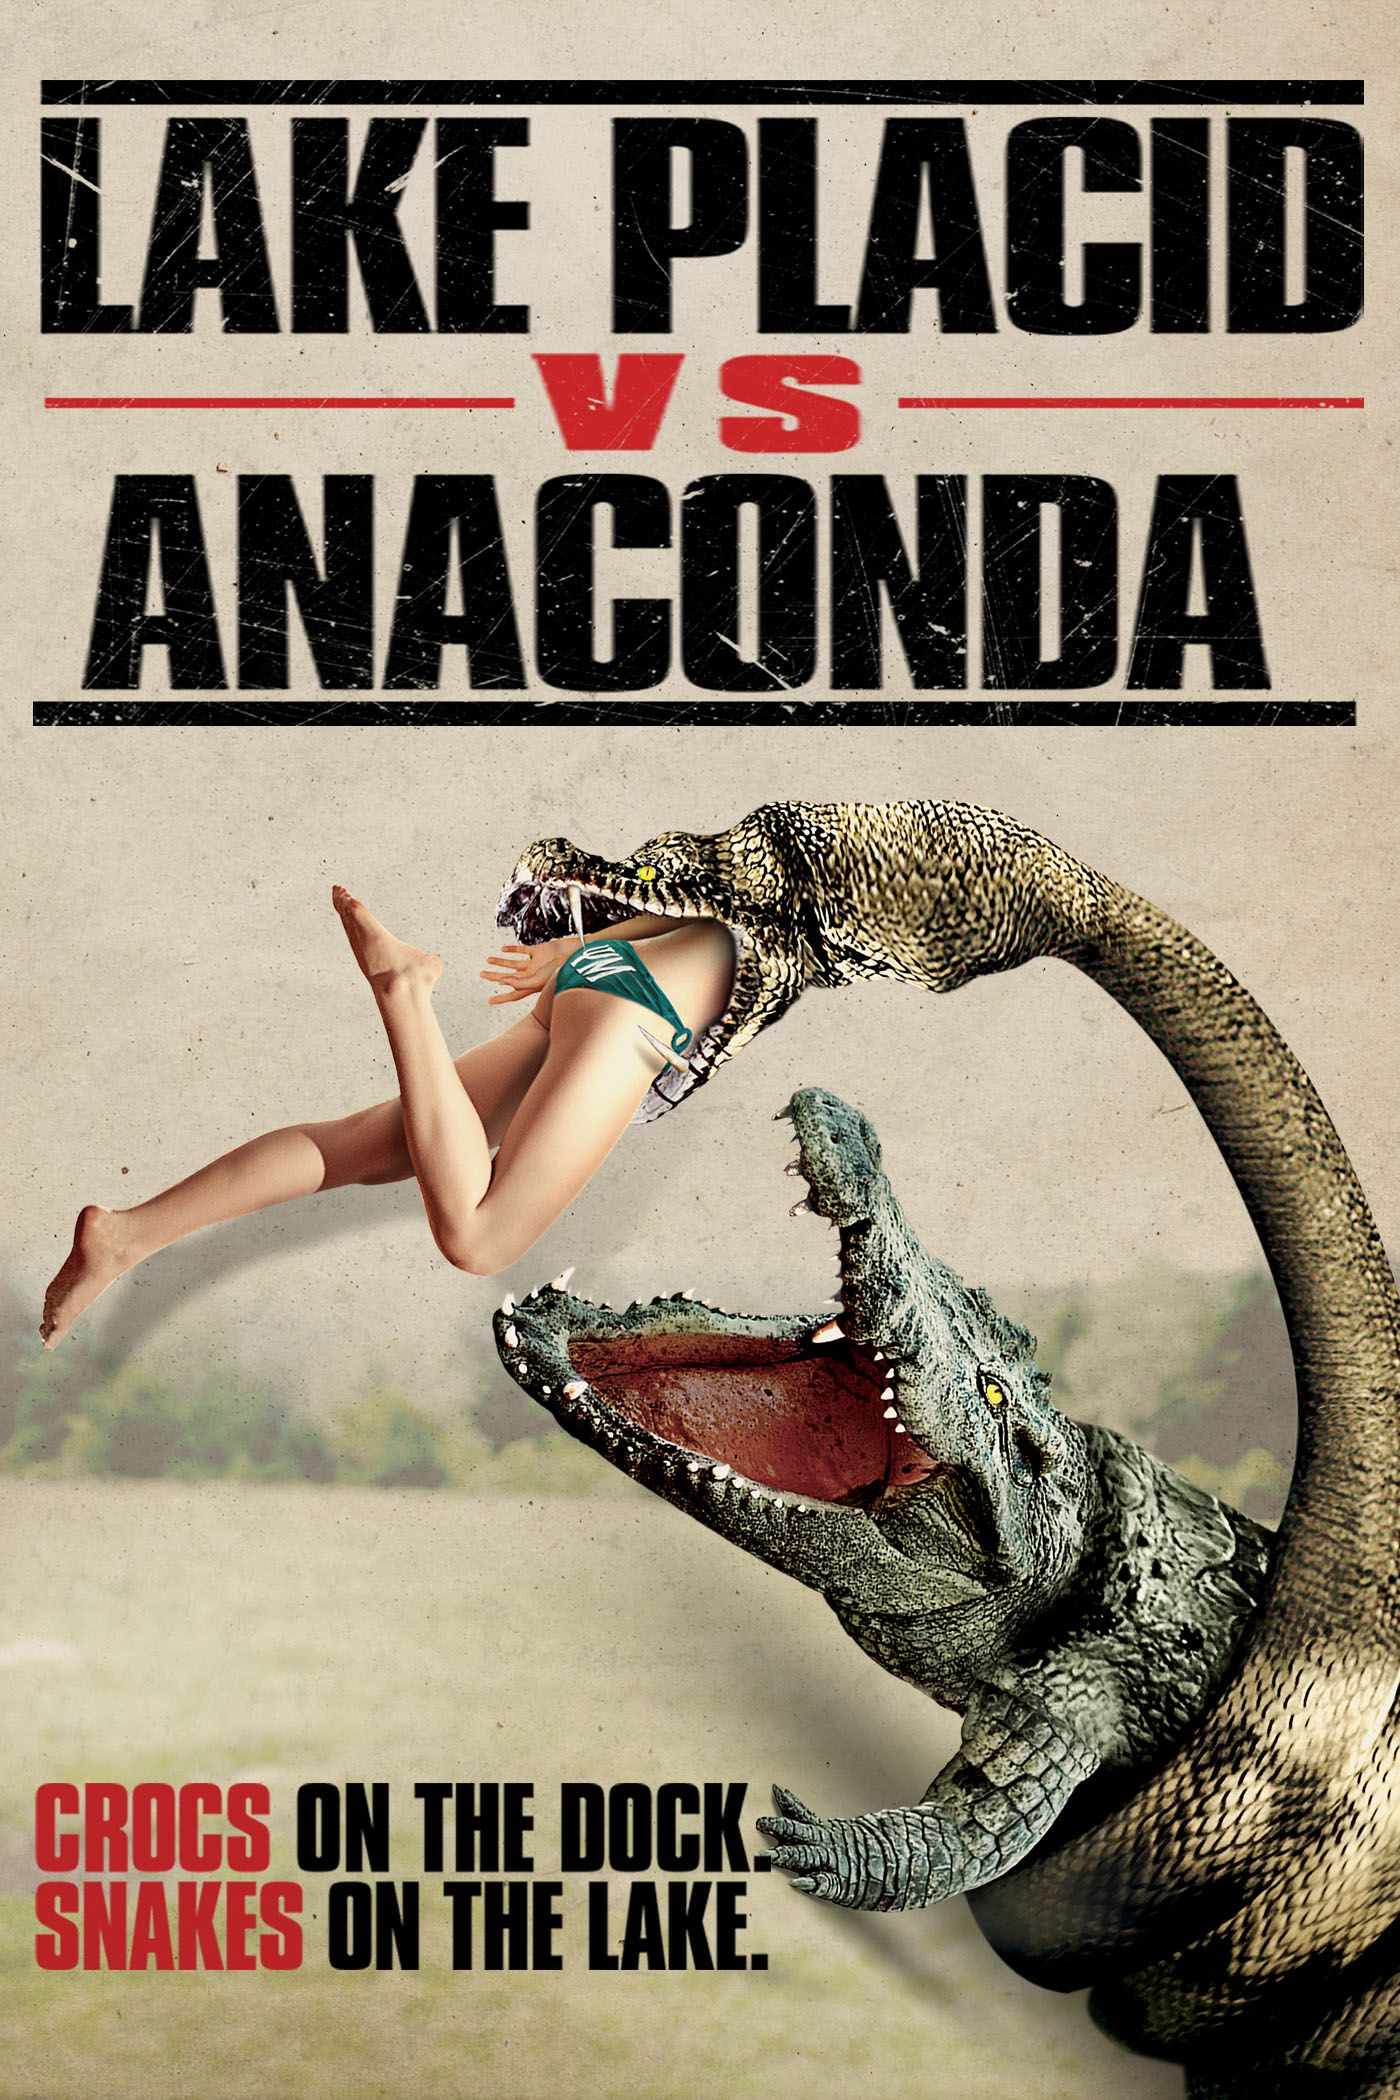 Lake placid vs anaconda full movie